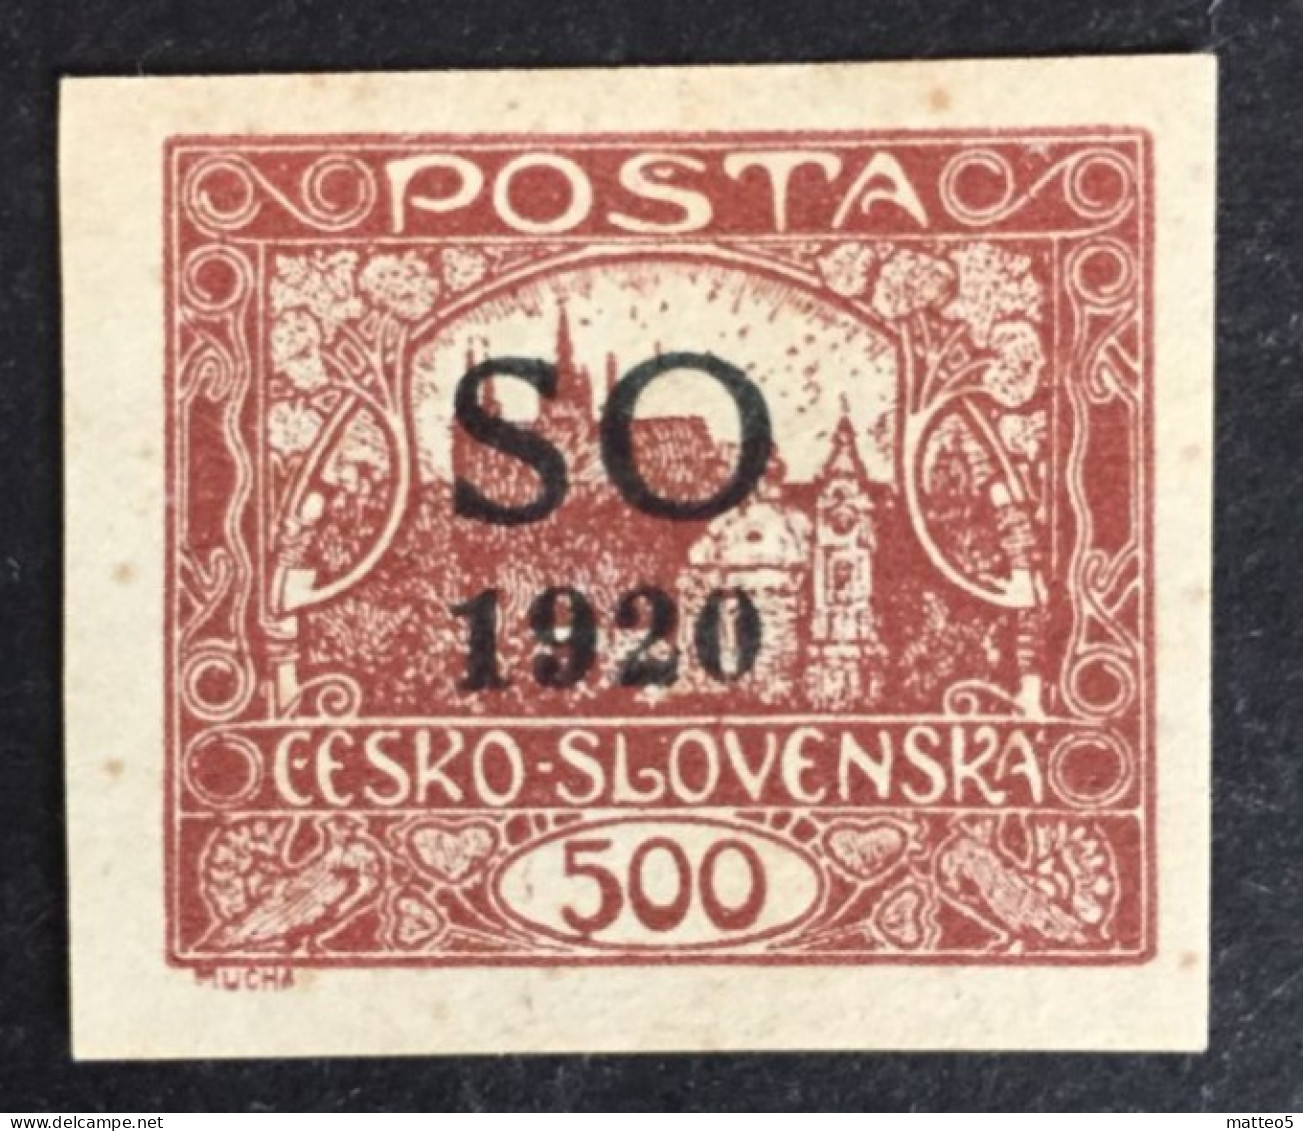 1920 Poland Eastern Silesia Czechoslovakia - Hradcany At Prague Overprint SO 500 - Unused ( Mint Hinged) - Schlesien